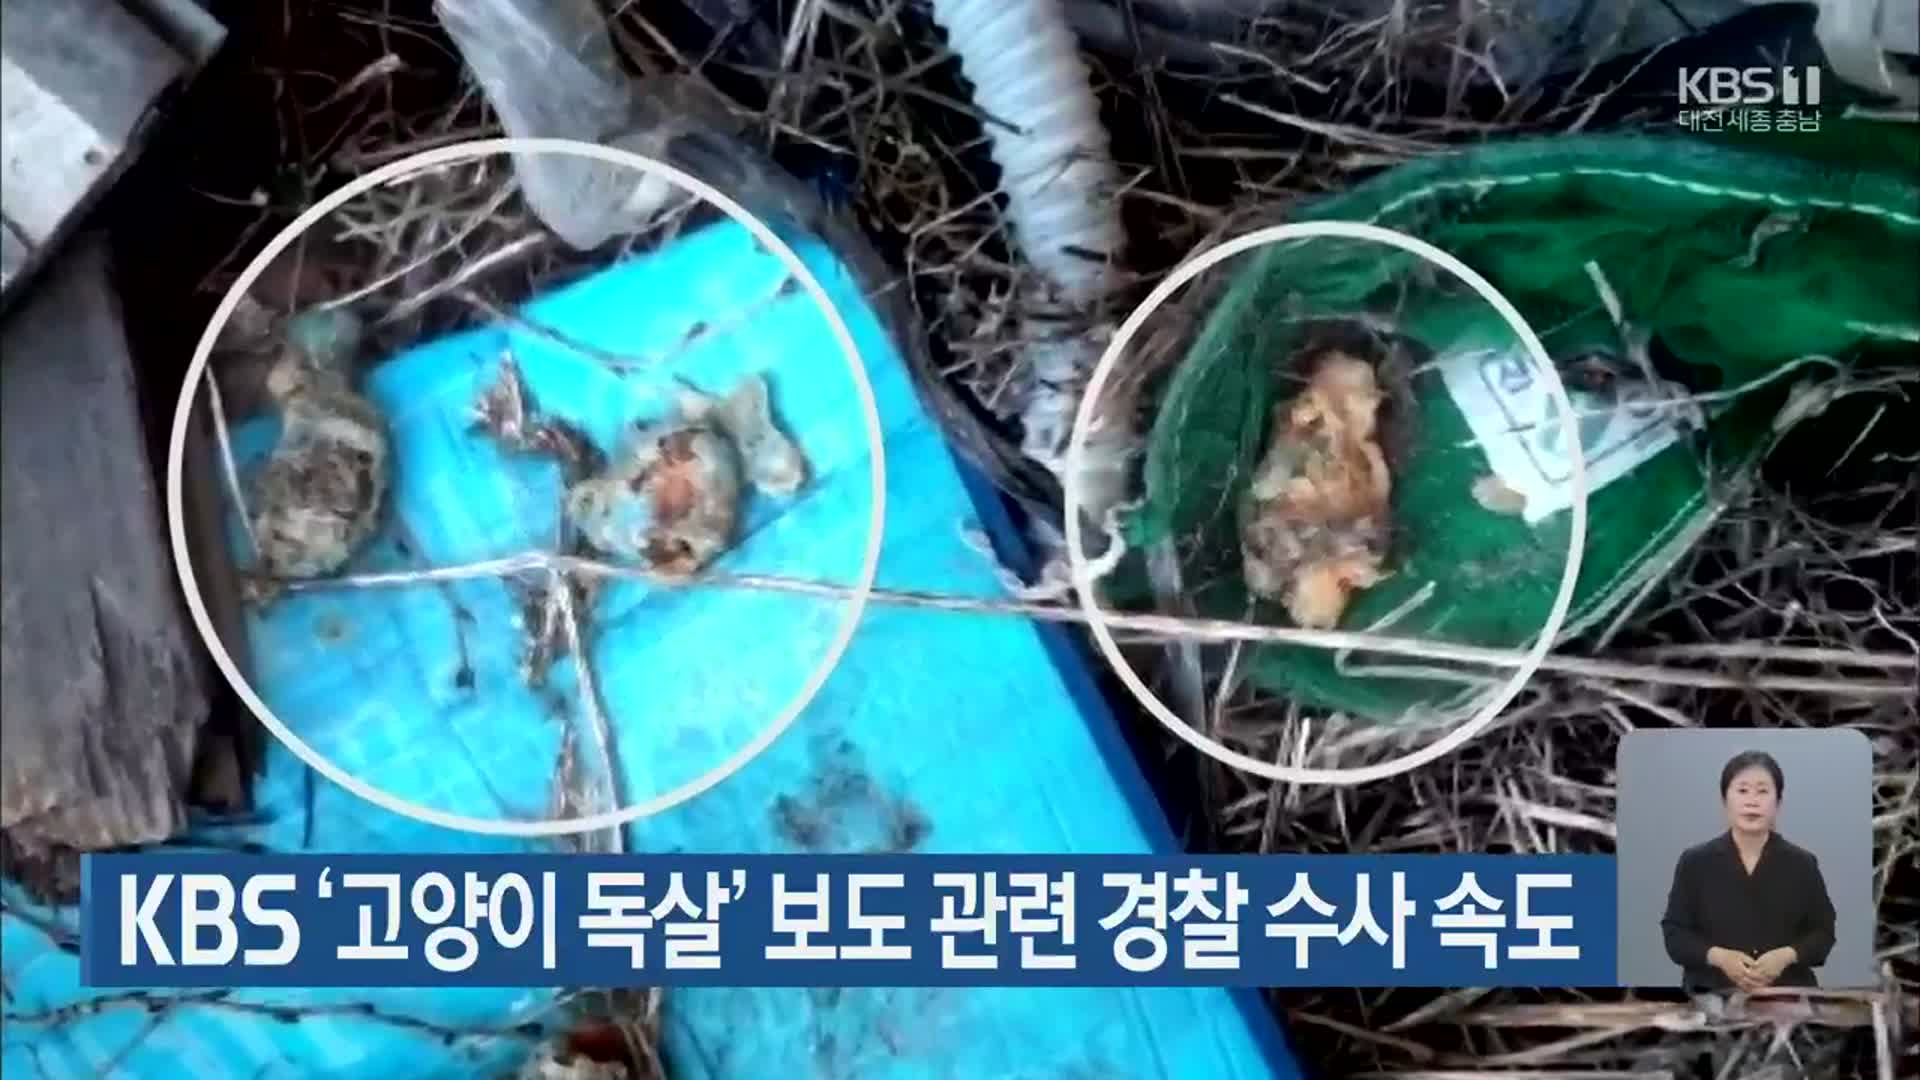 KBS ‘고양이 독살’ 보도 관련 경찰 수사 속도